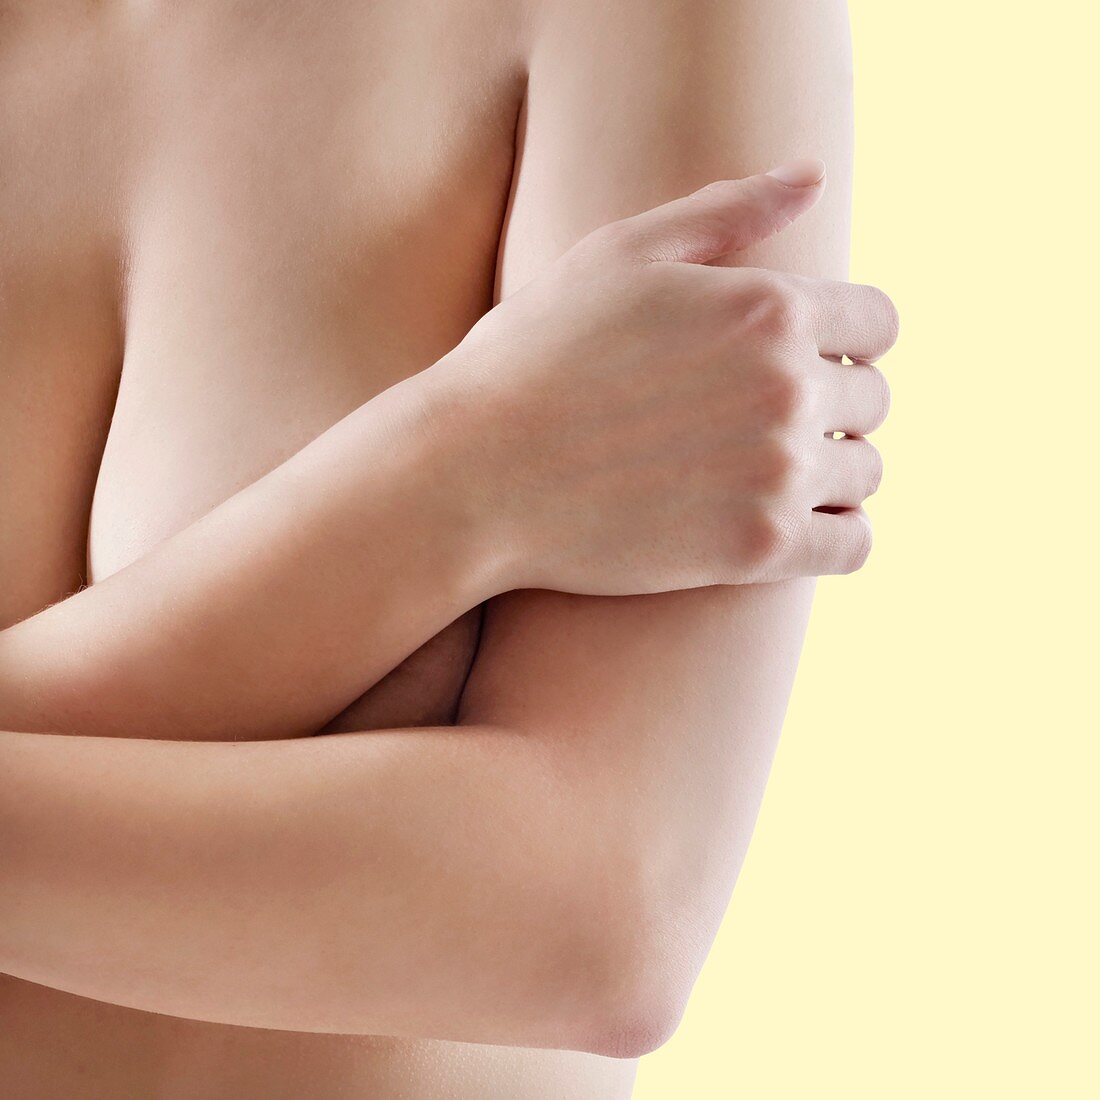 Breast awareness, conceptual image